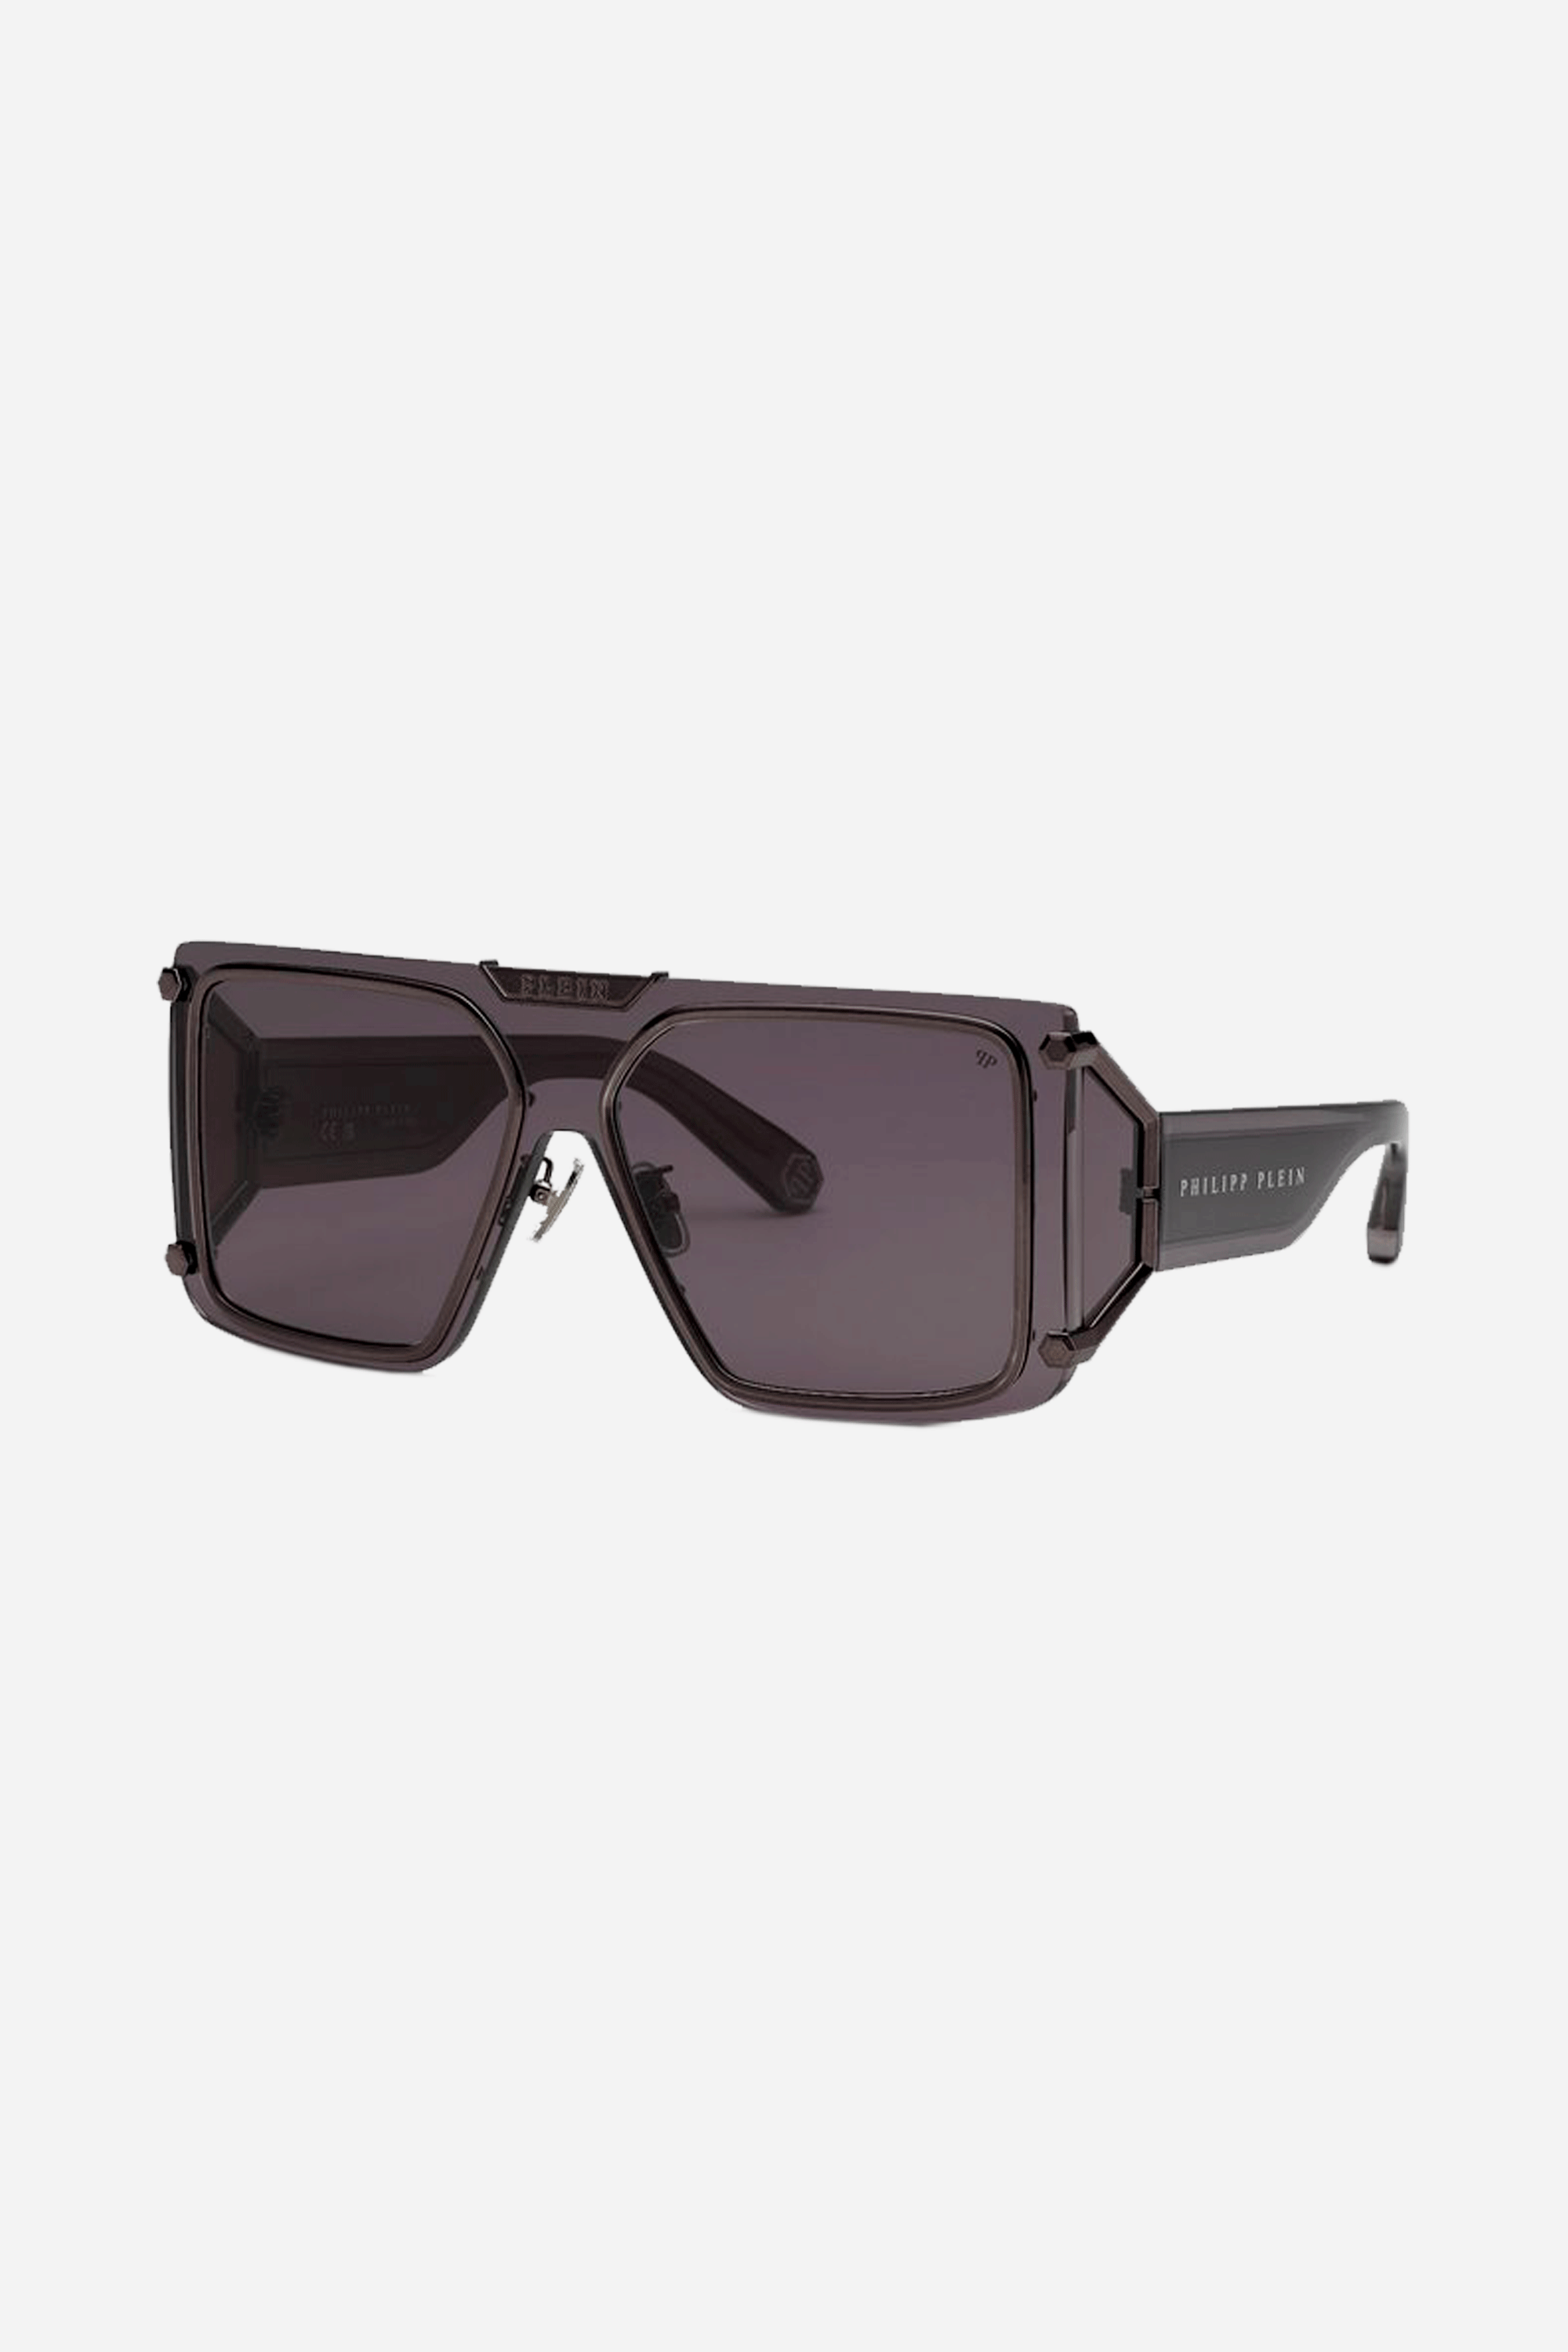 Philipp Plein black mask sunglasses - Eyewear Club